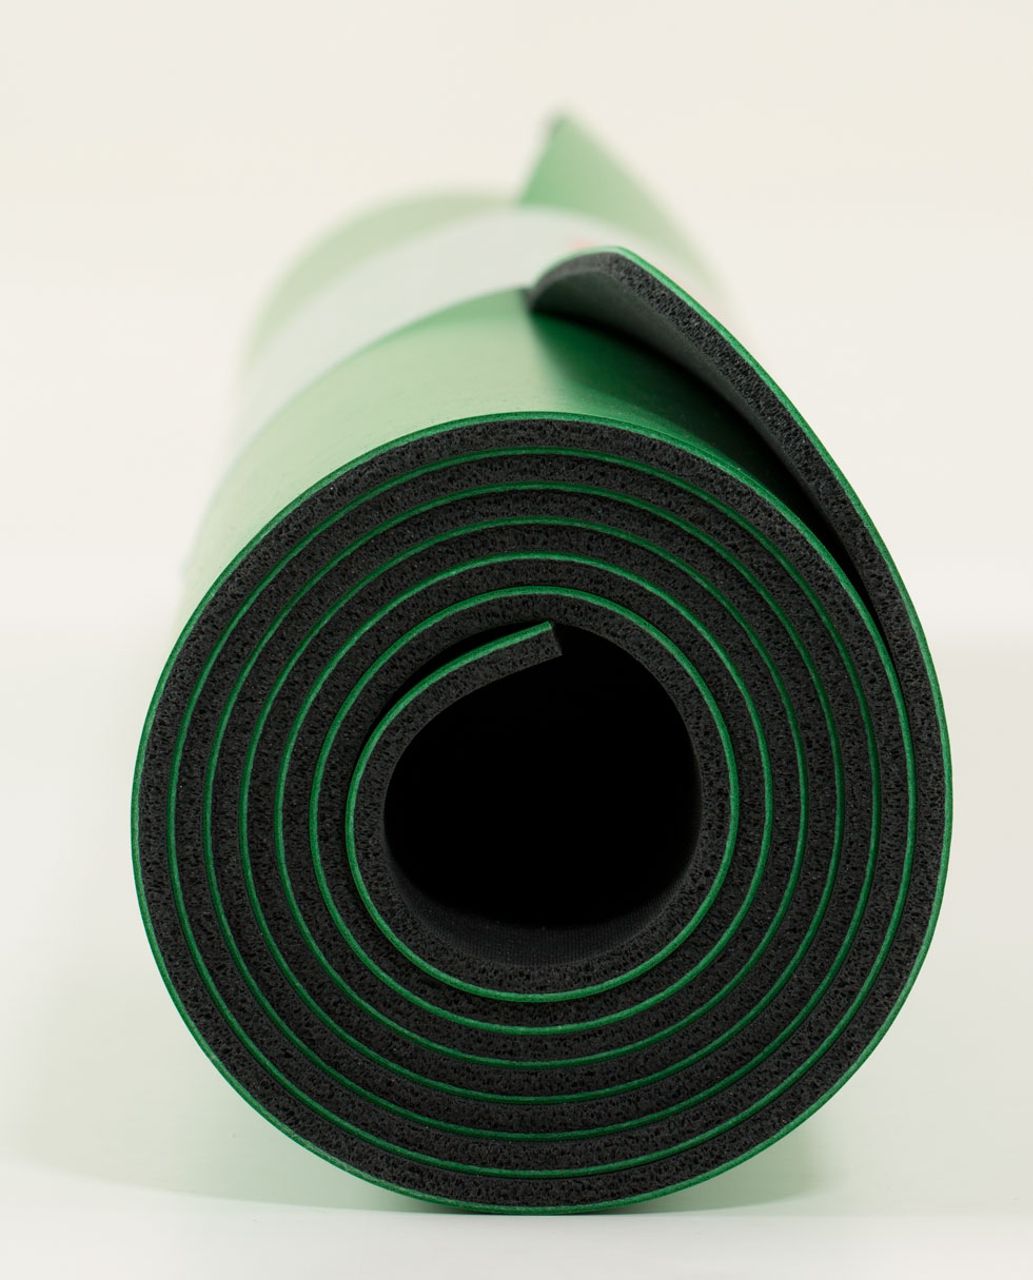 NWT LULULEMON SEAWHEEZE Green Travel The Un Yoga Mat 1.5mm, 71x26 Rare